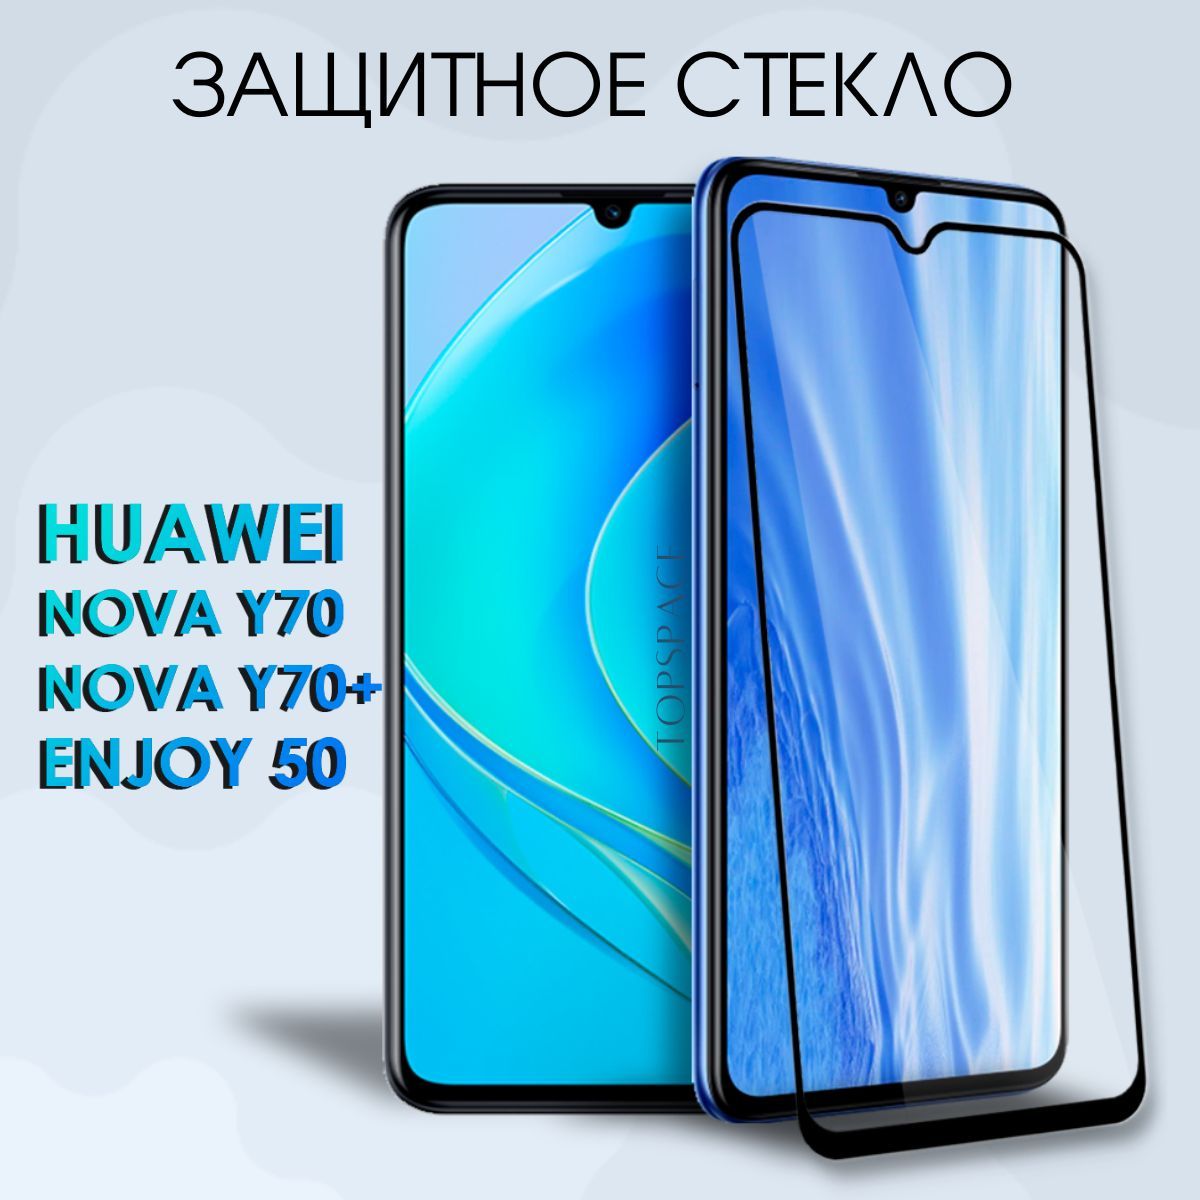 Реклама телефона Huawei Nova y 70 Plus. Телефон huawei nova 70